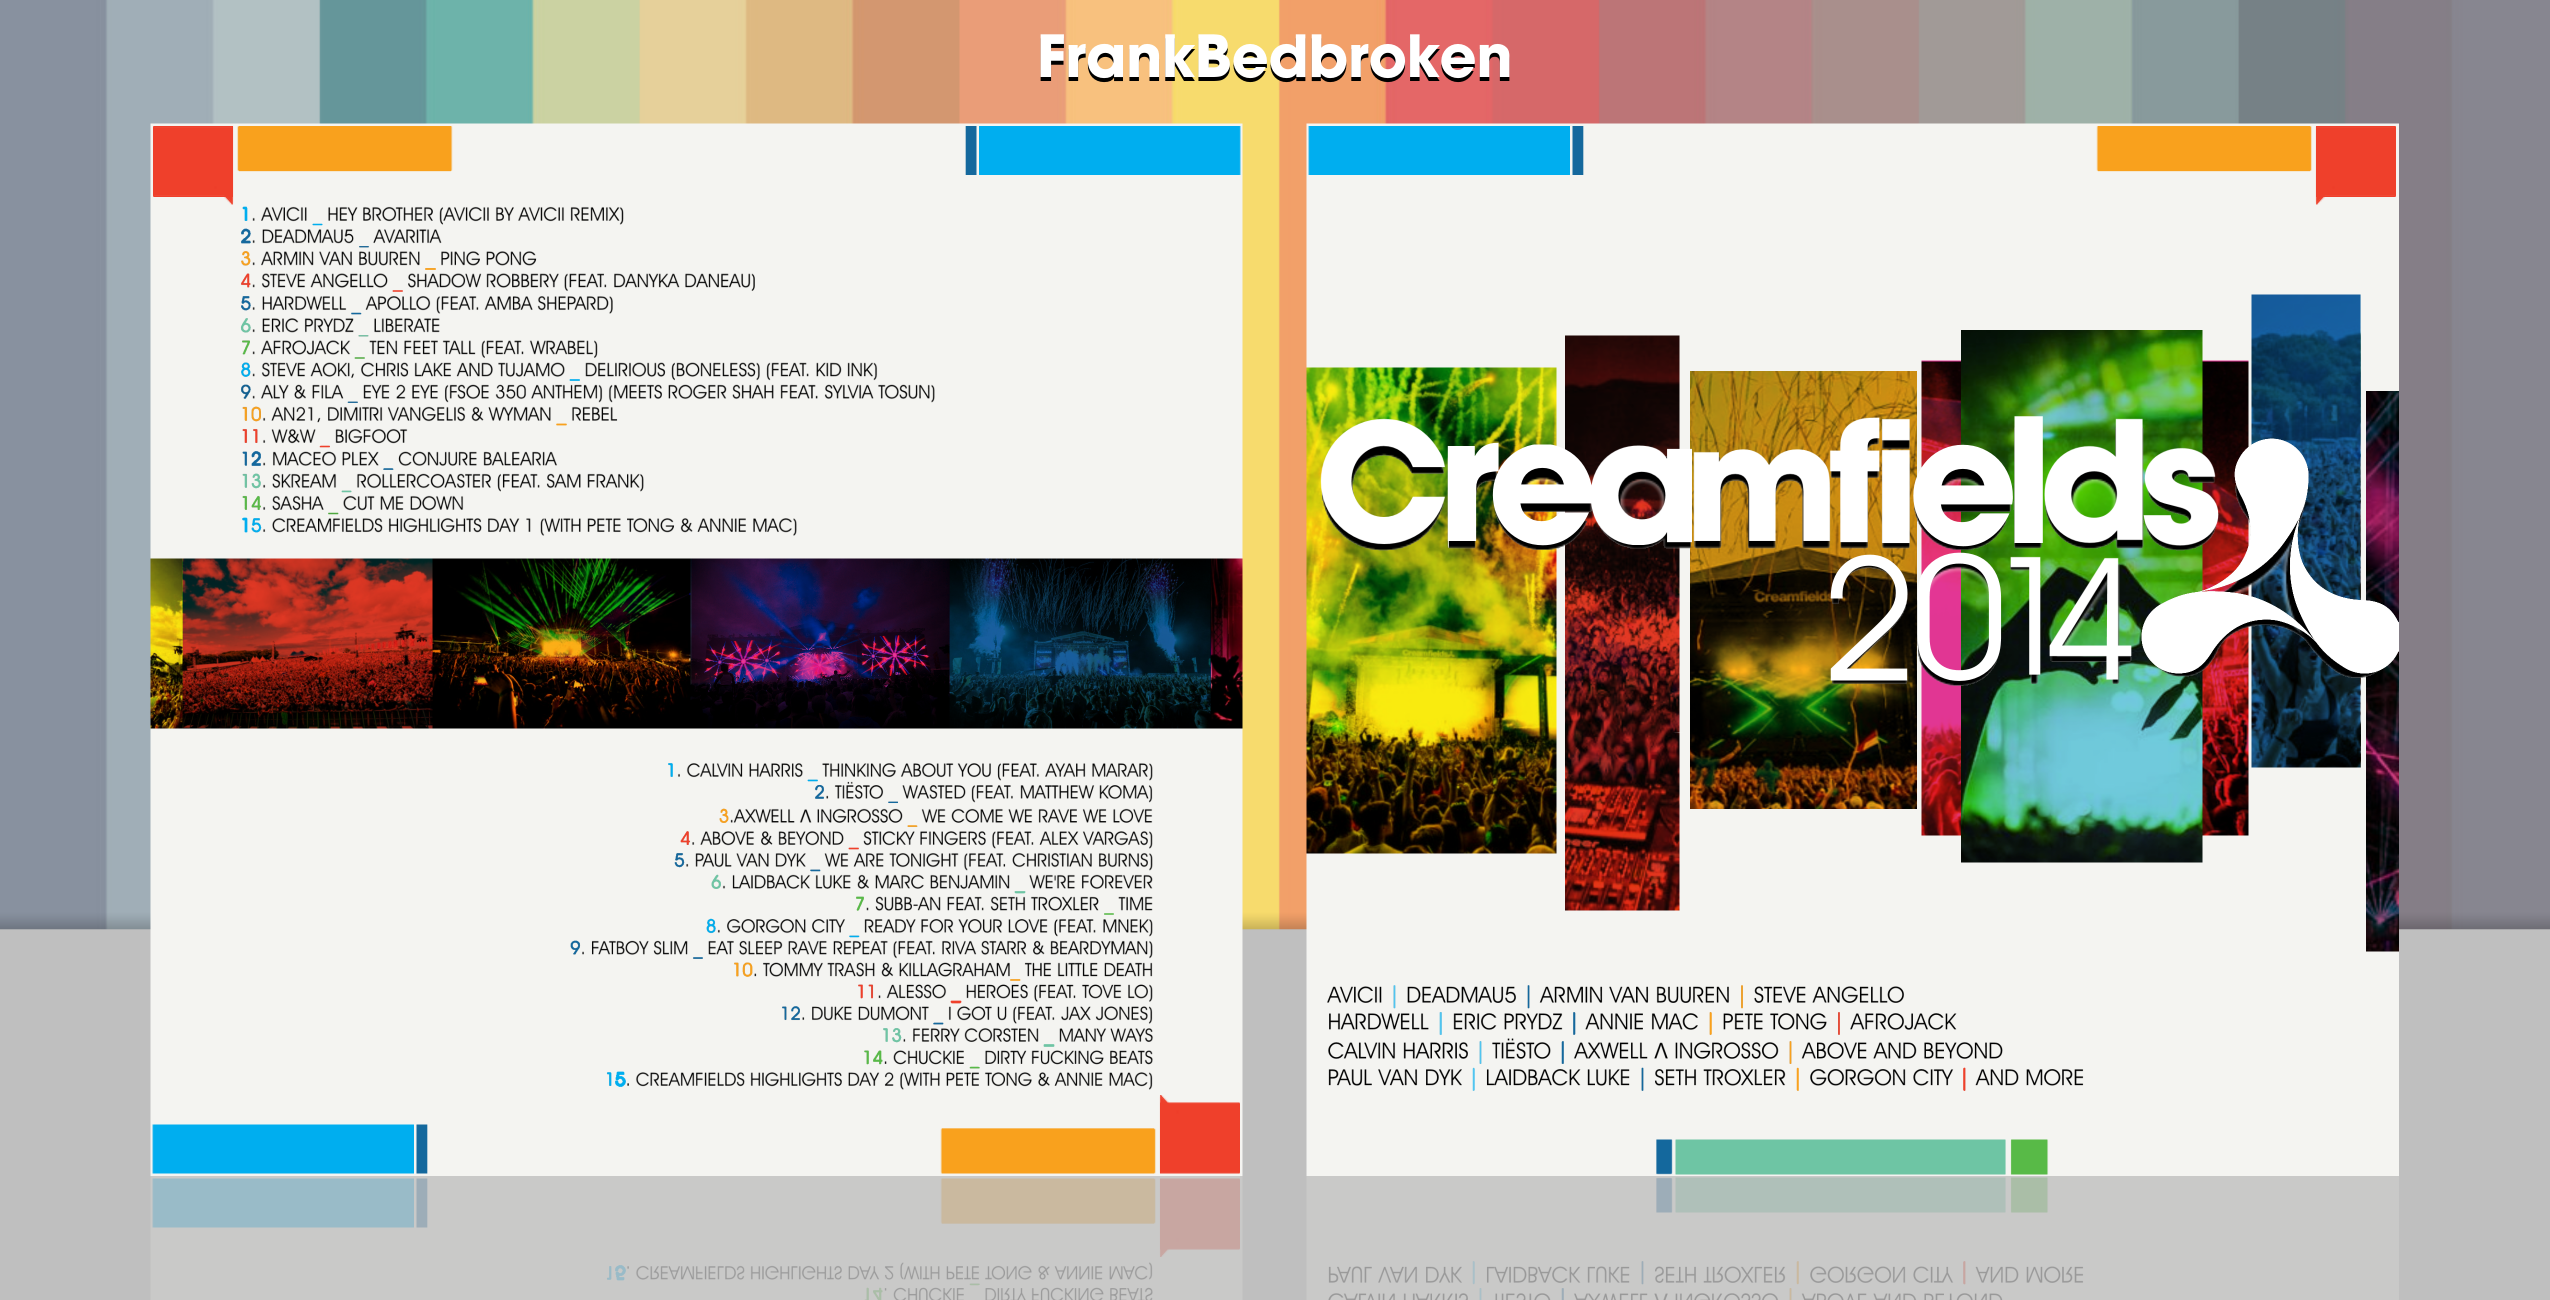 Creamfields 2014 box cover